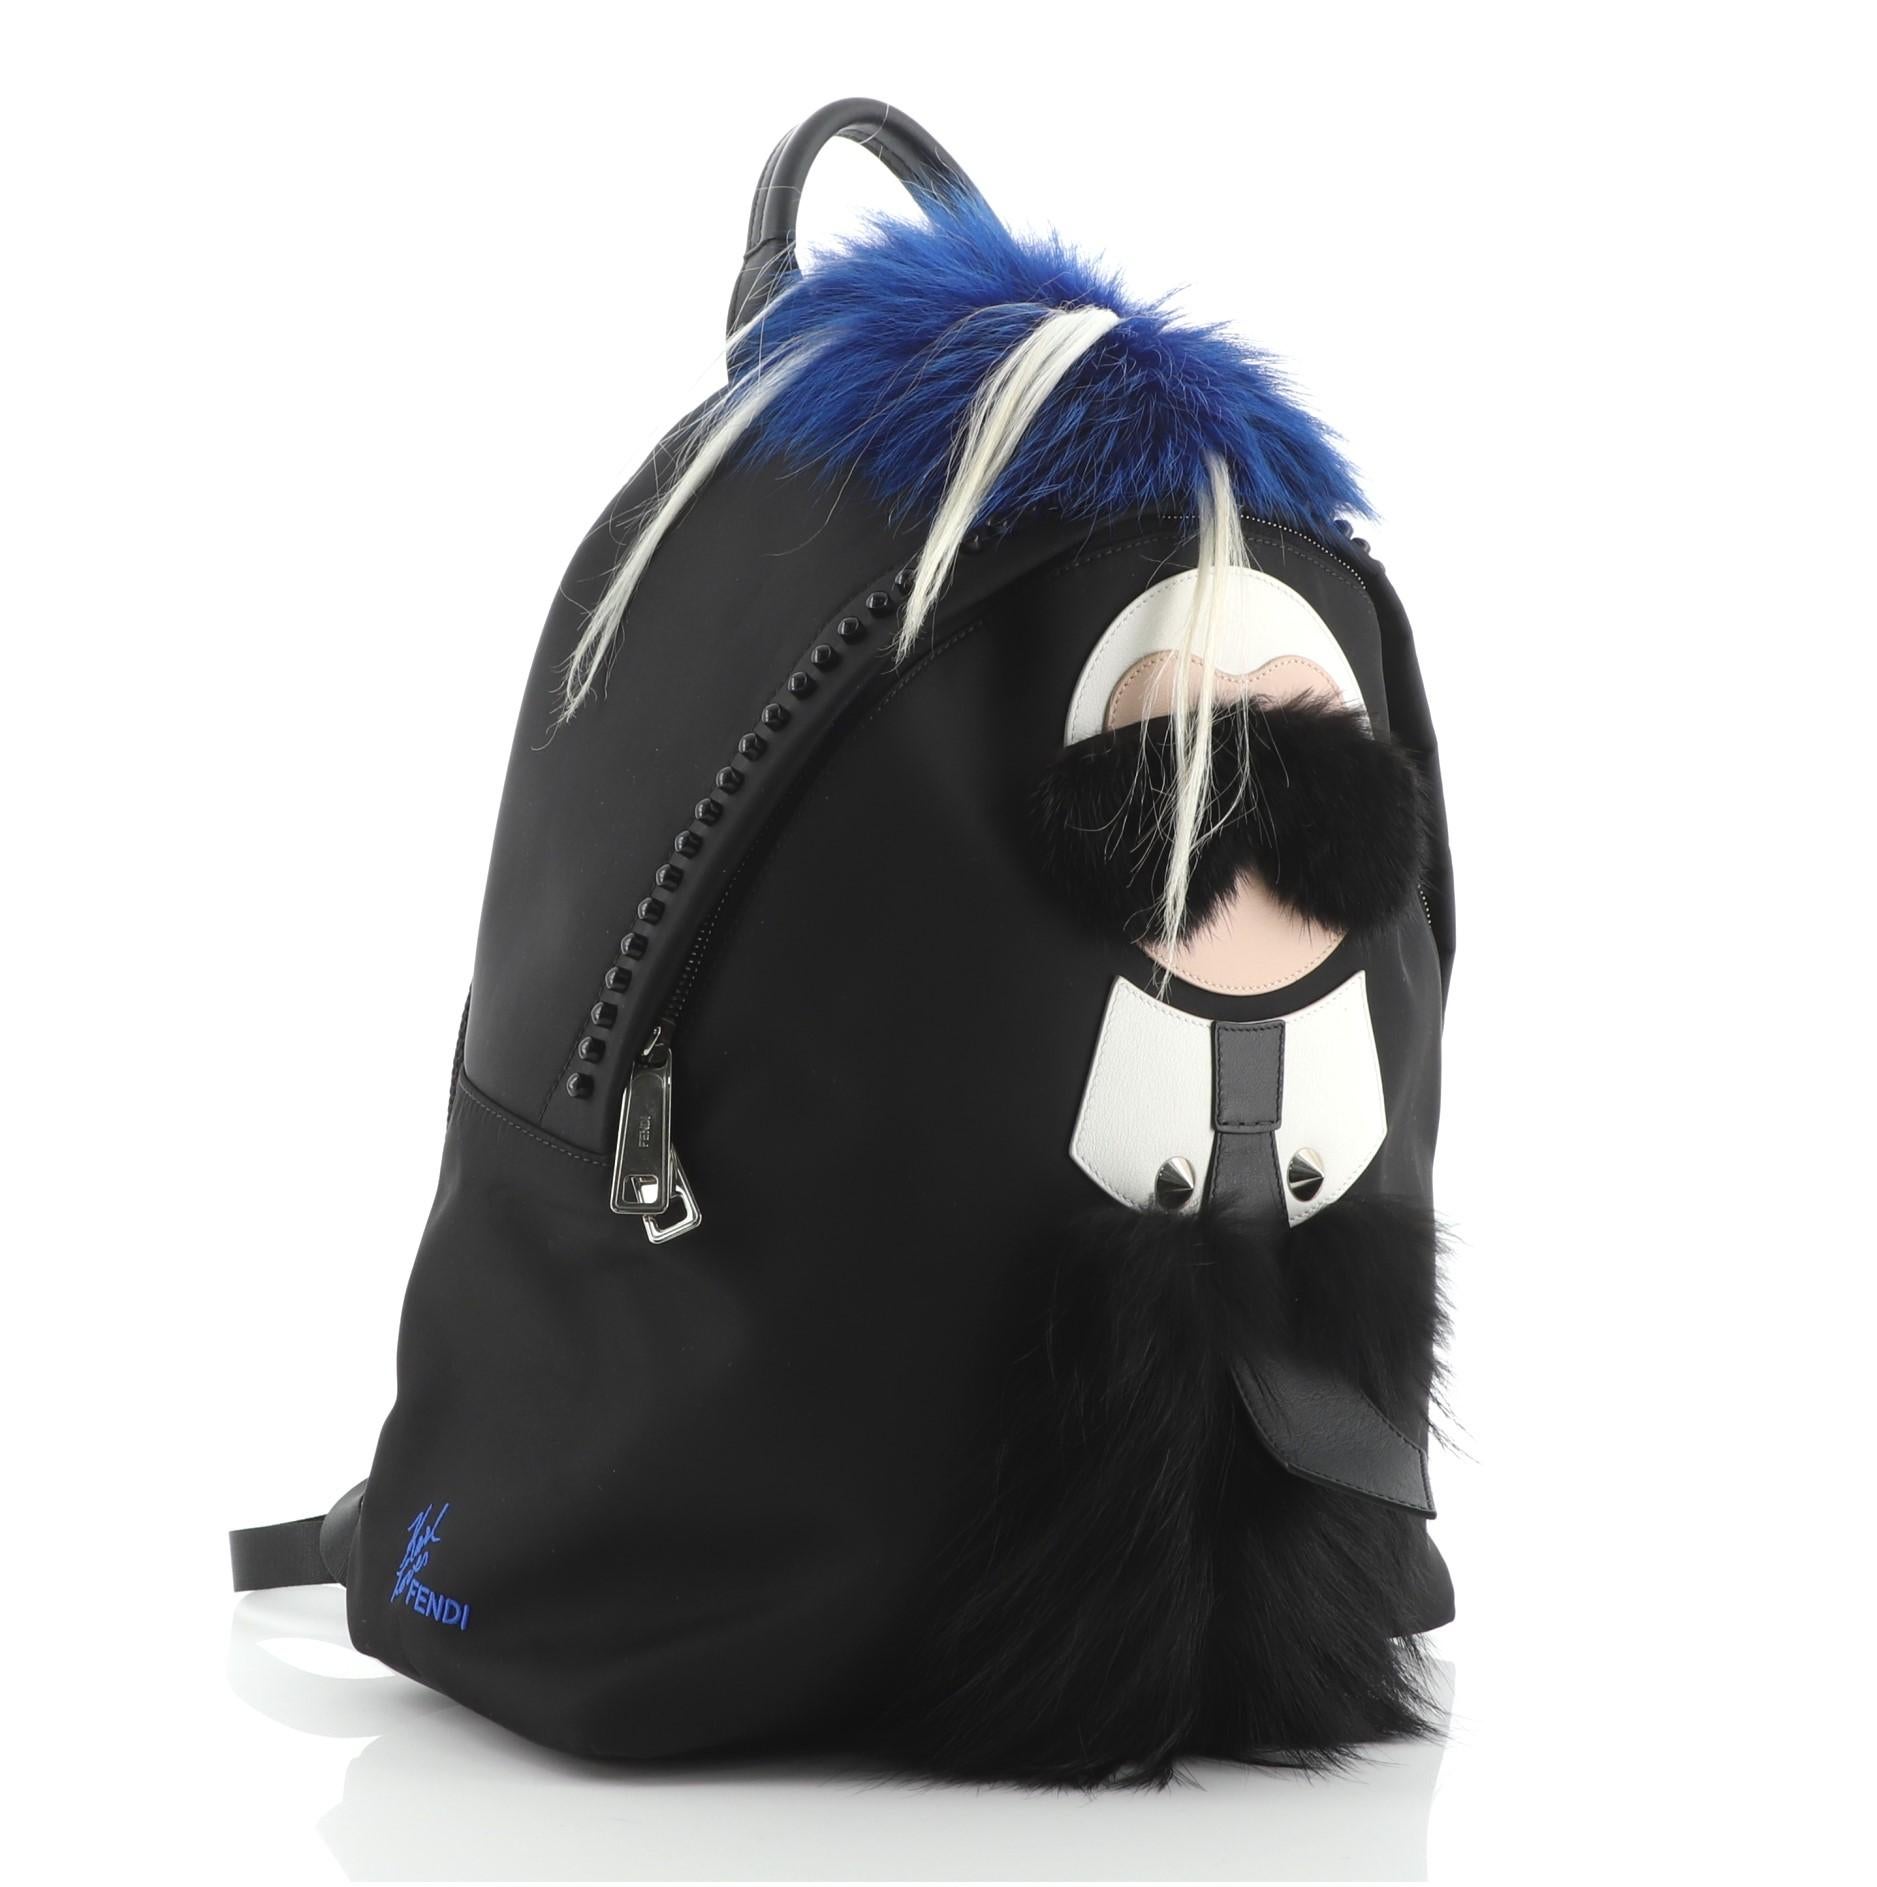 Fendi Karlito Backpack Nylon with Fur Large
Black, Blue, White


51843MSC